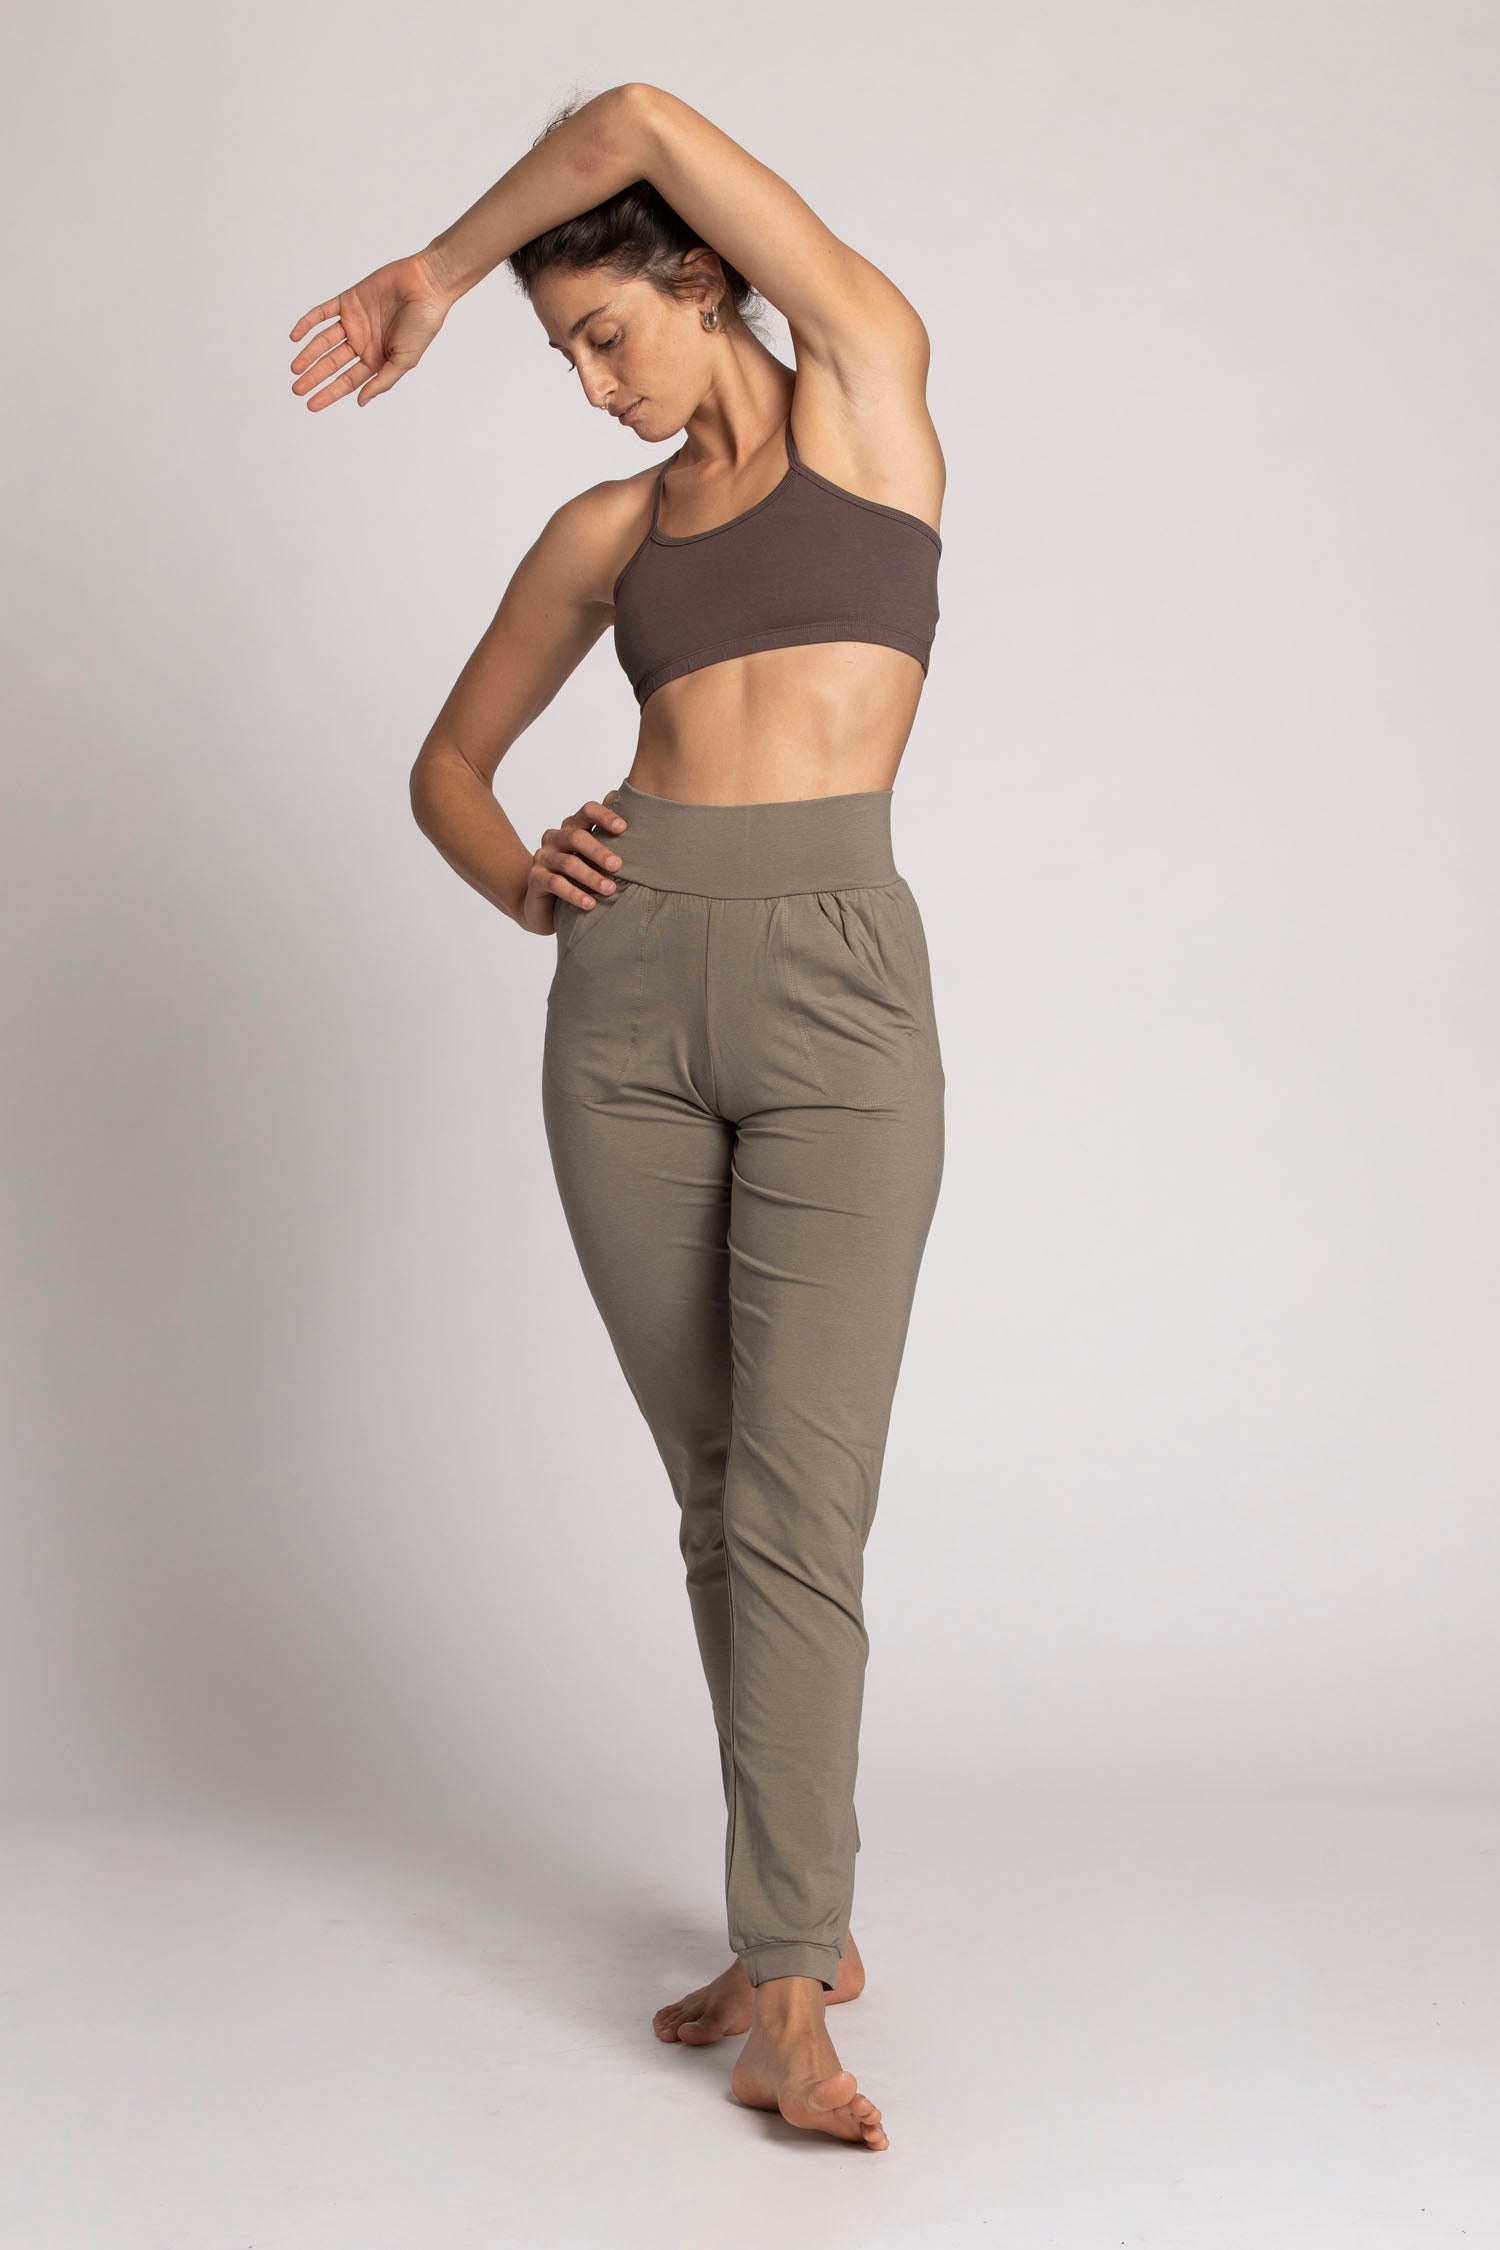 Yoga Pants & Shorts, Womens Clothing